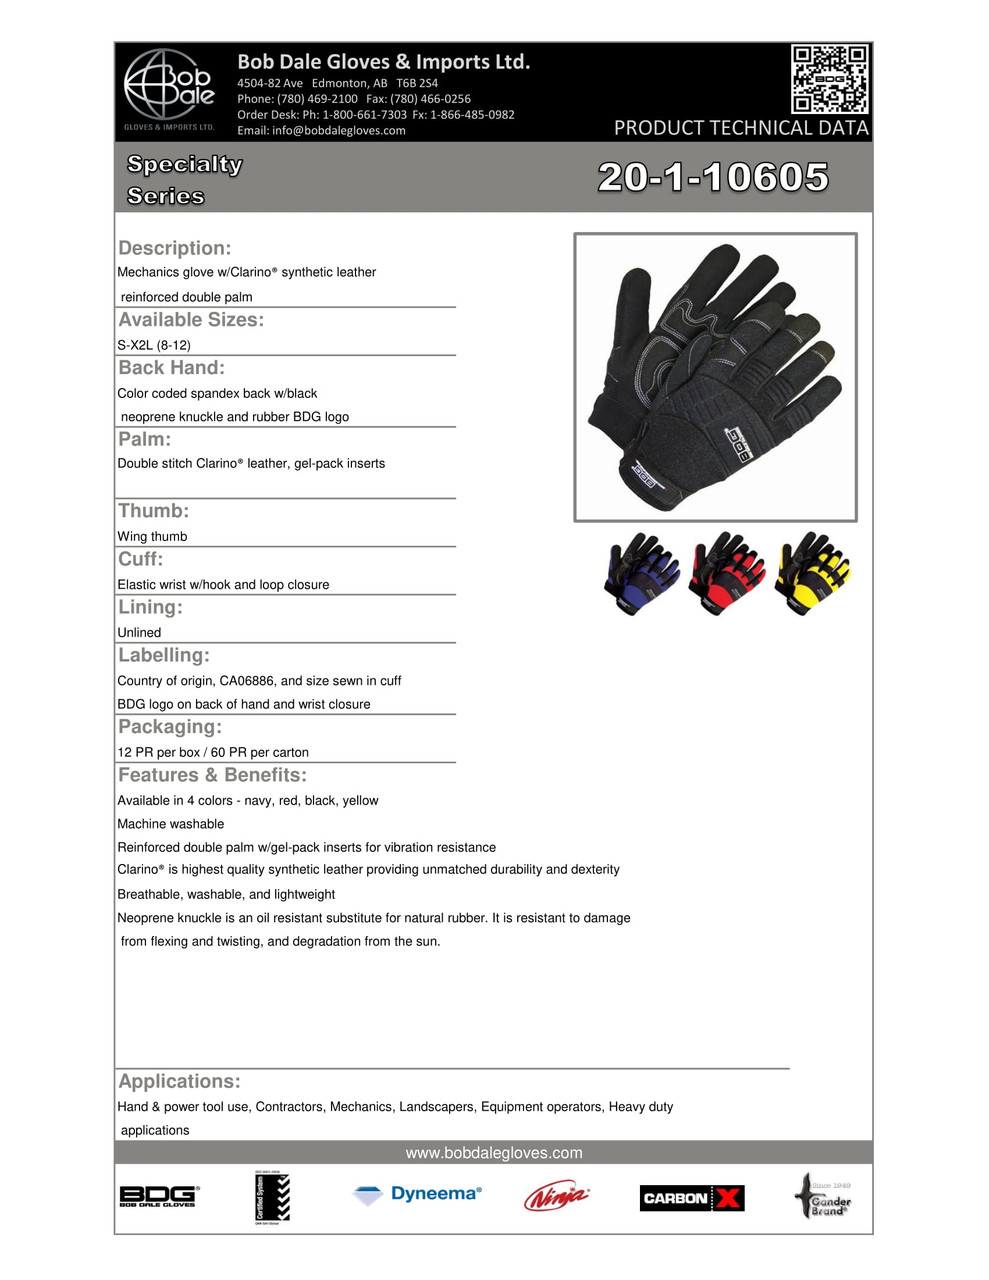 Mechanics Clarino® Leather Anti-Vib Gel Palm Yellow/Black  20-1-10605Y